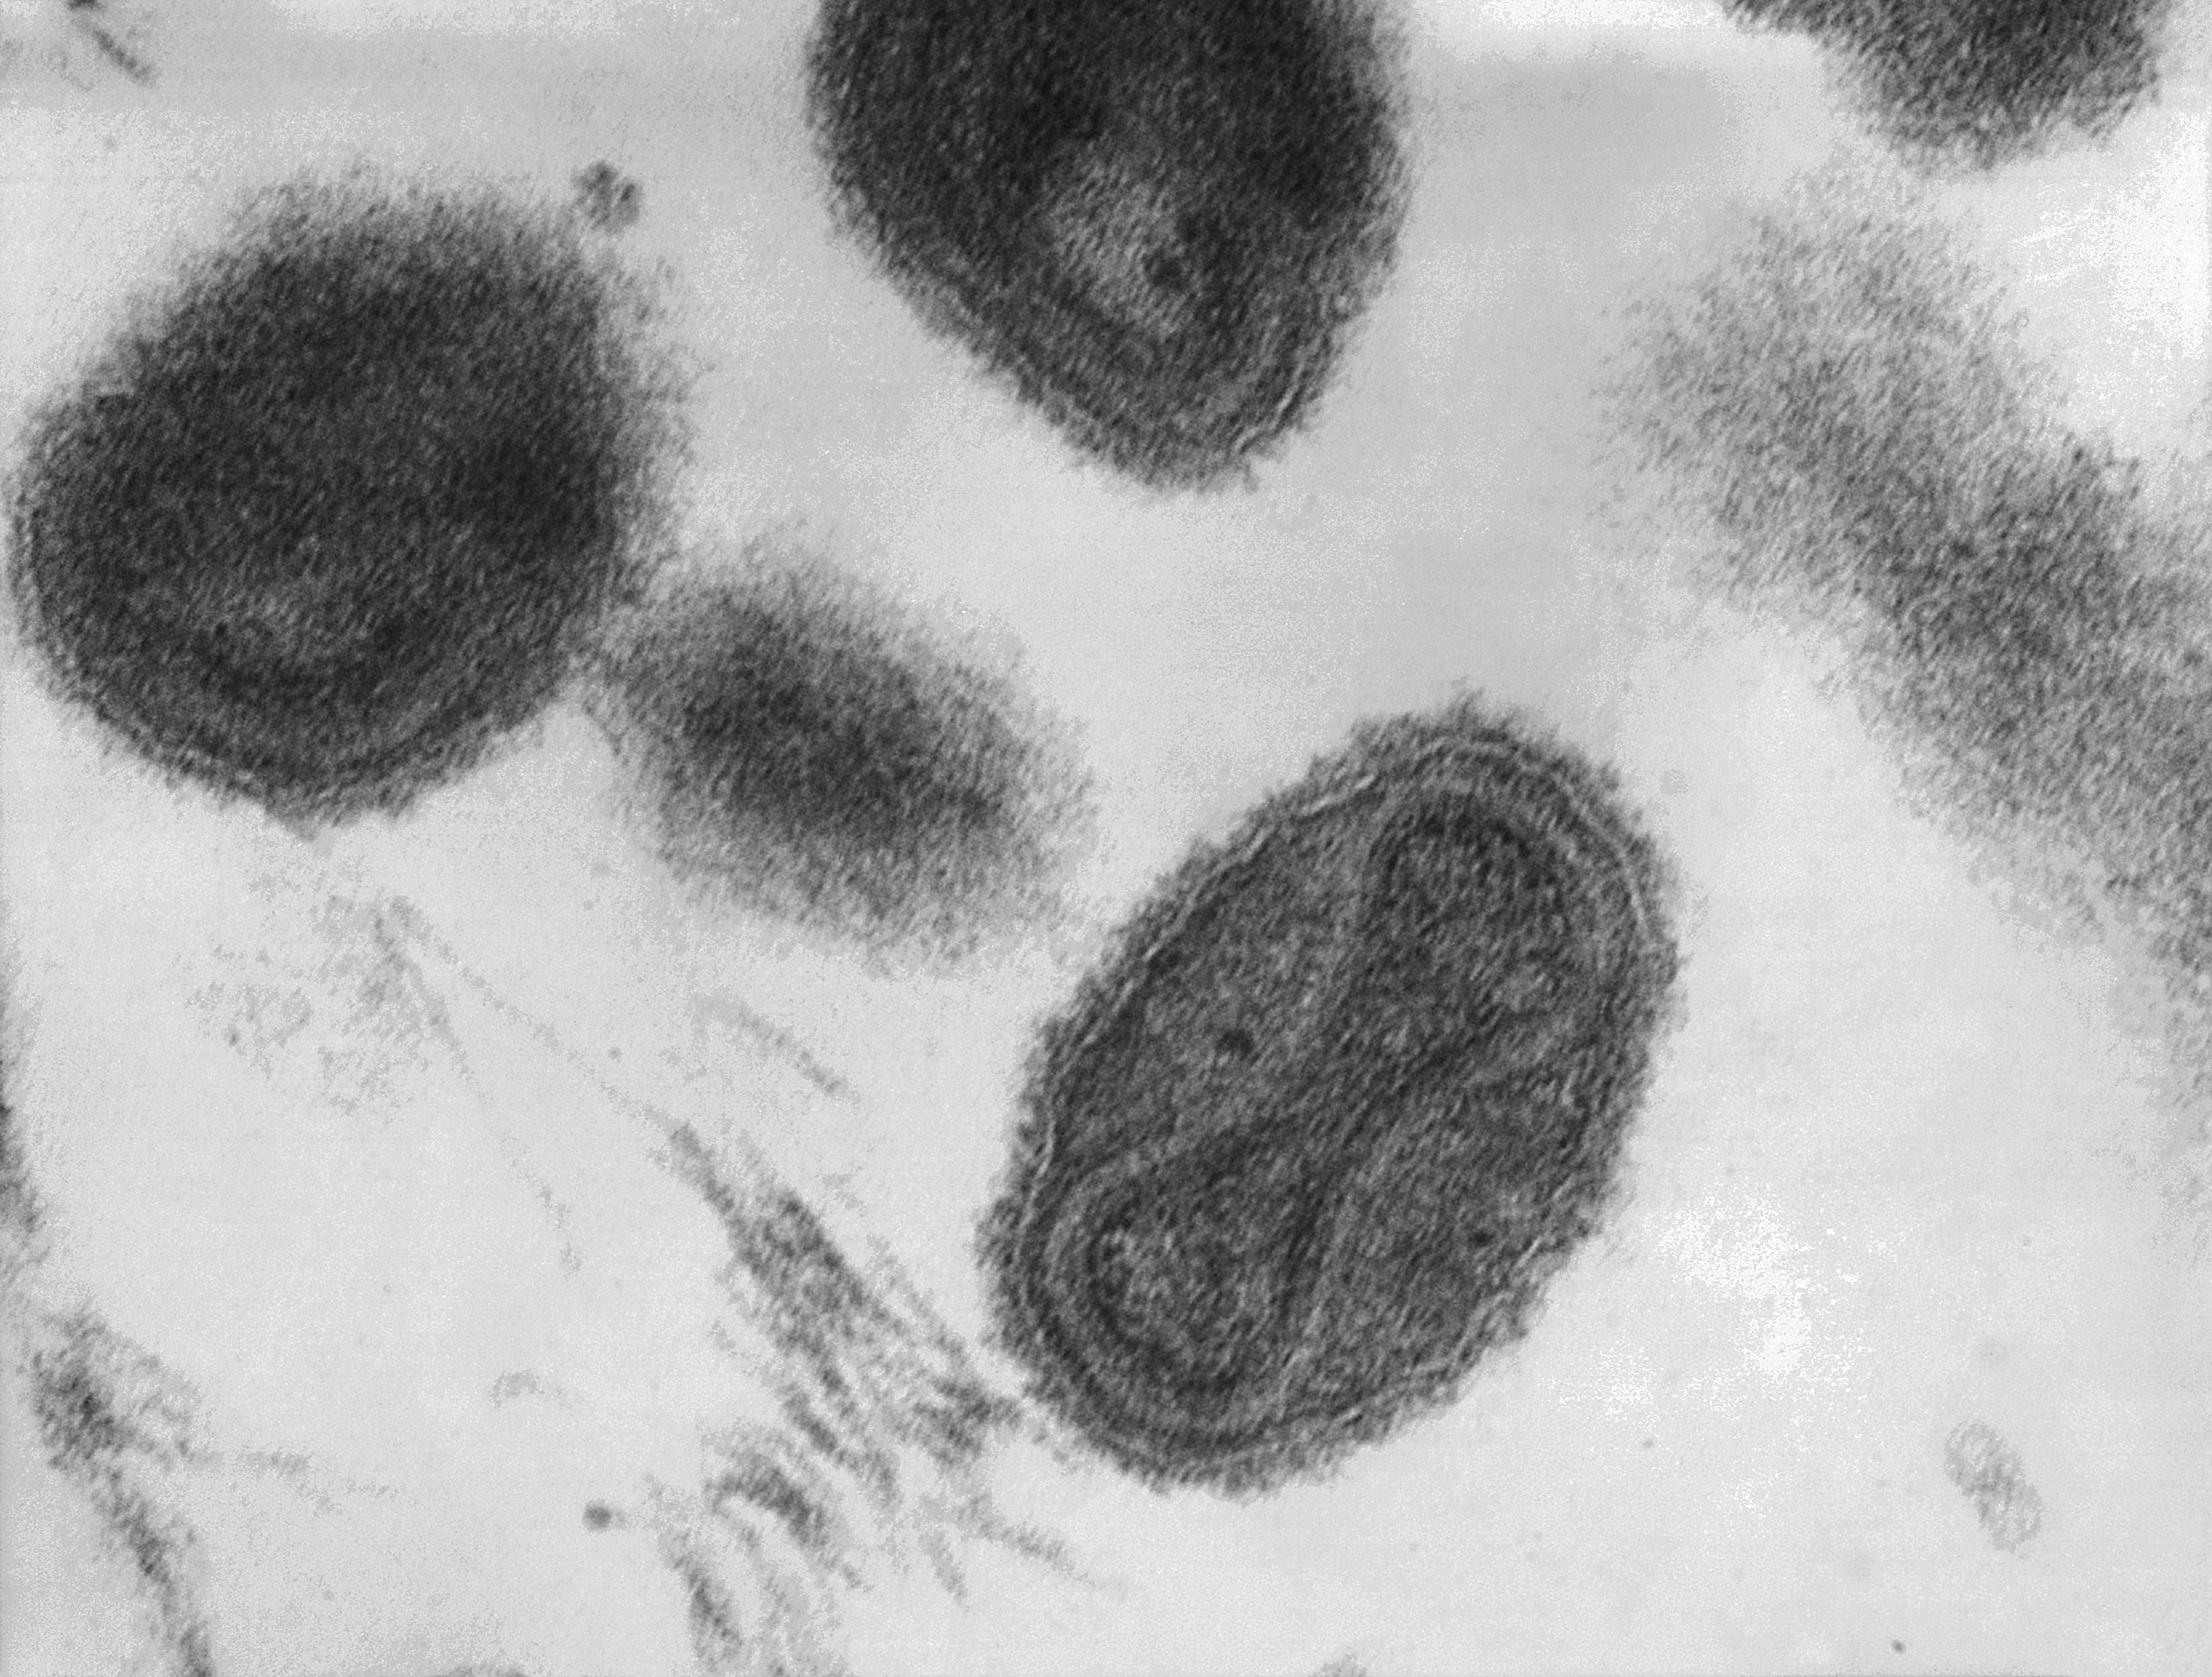 The Overlooked, Dangerous Nexus Between National Security and Public Health: The Case of Smallpox